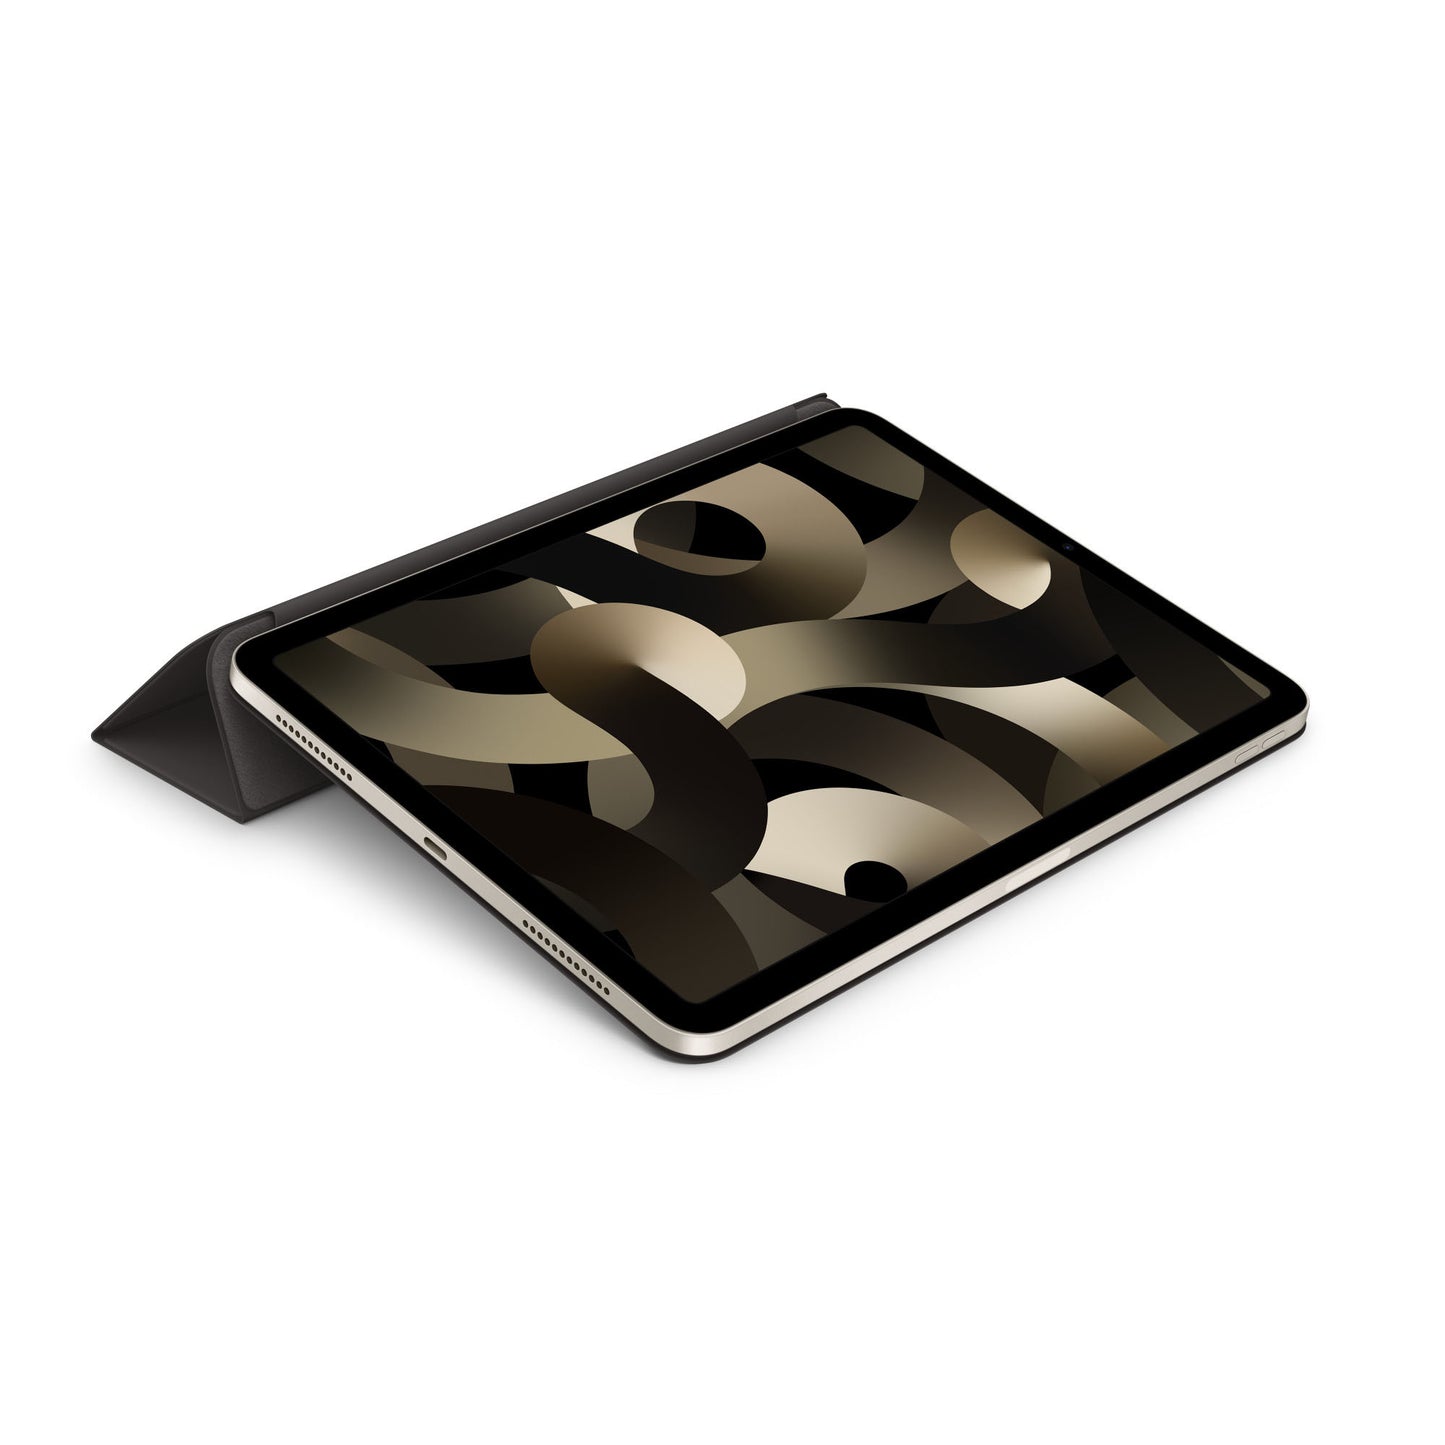 Smart Folio for iPad Air (4th generation) - Black